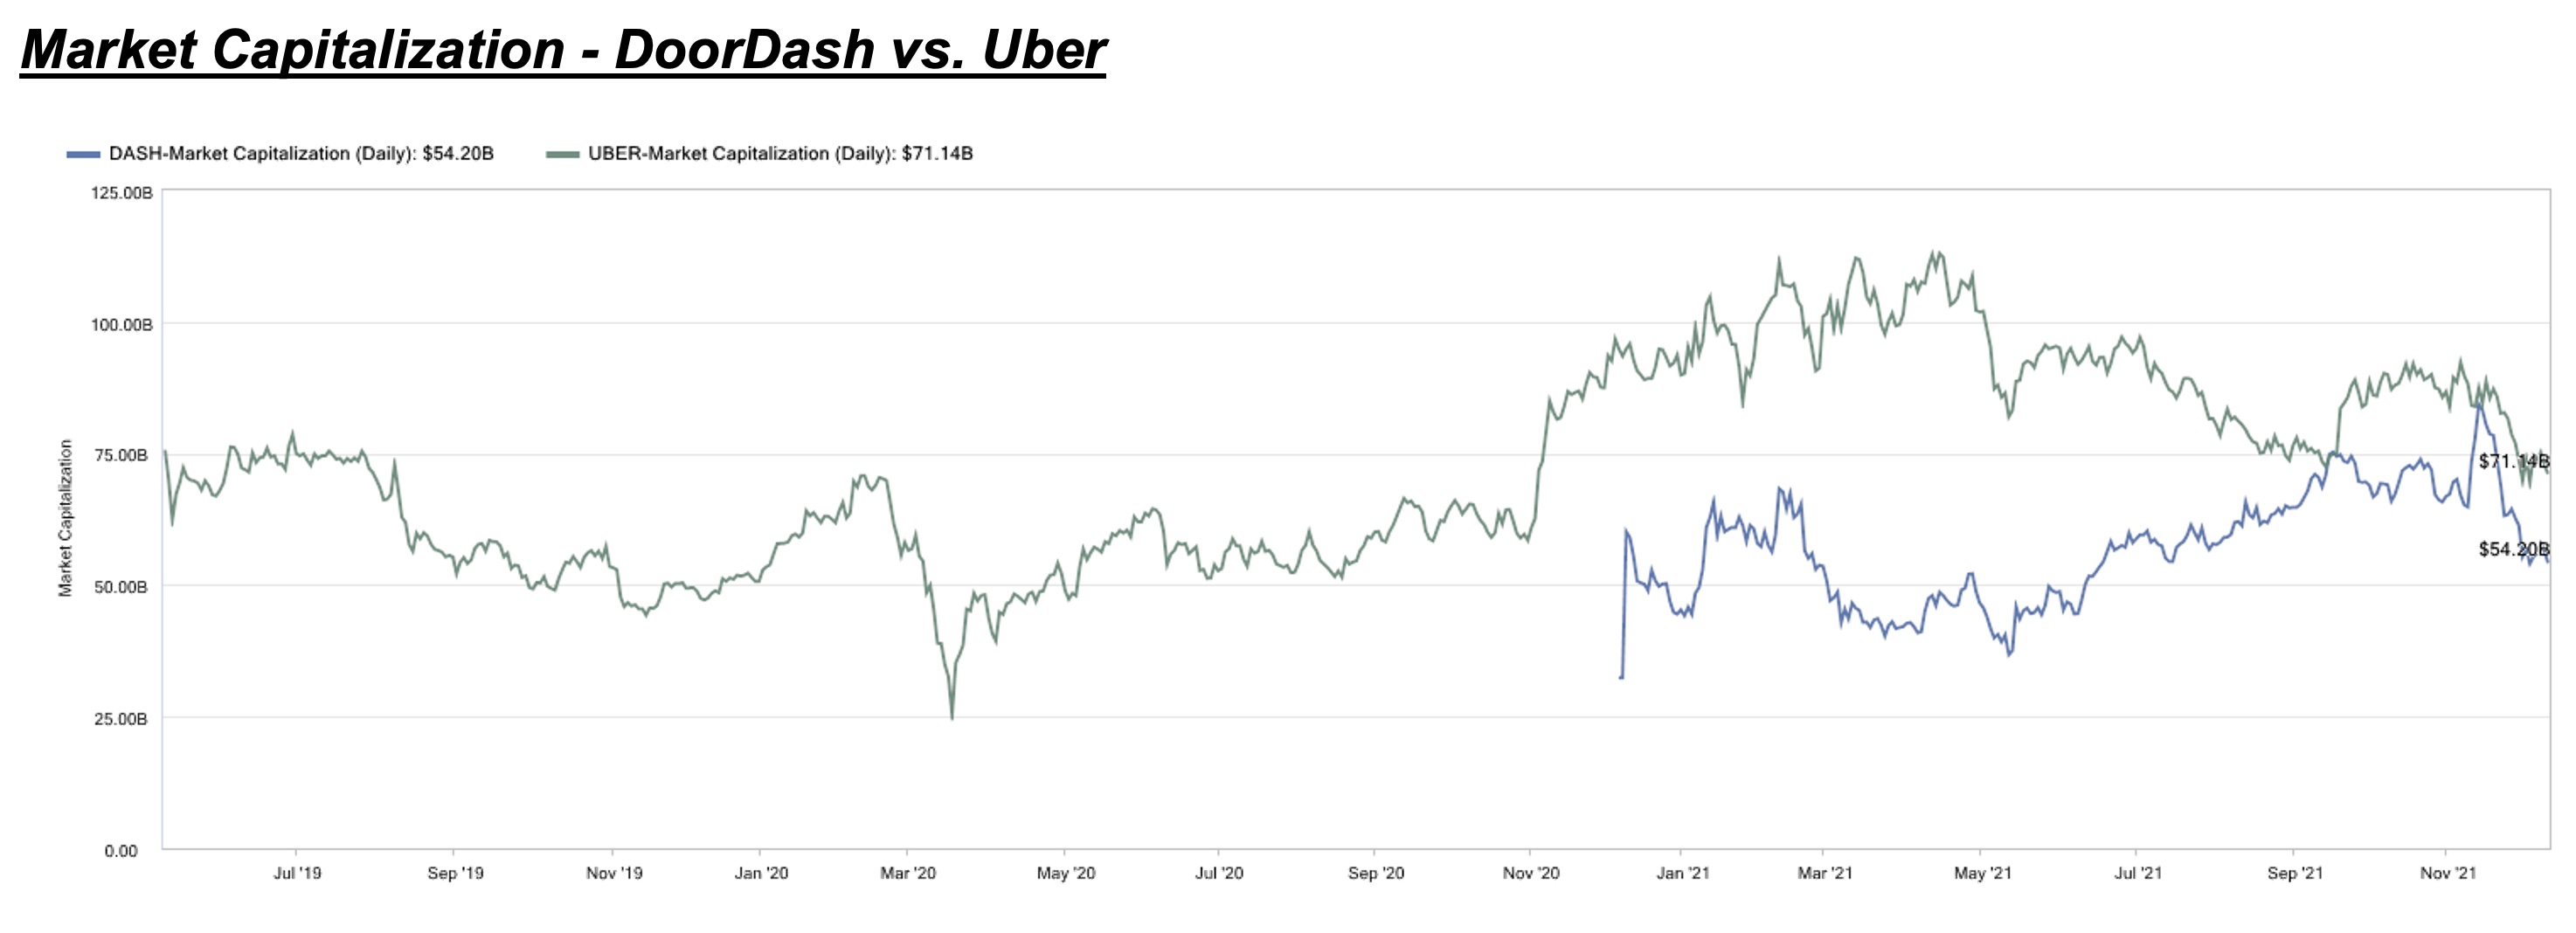 Market Capitalization - DoorDash vs. Uber